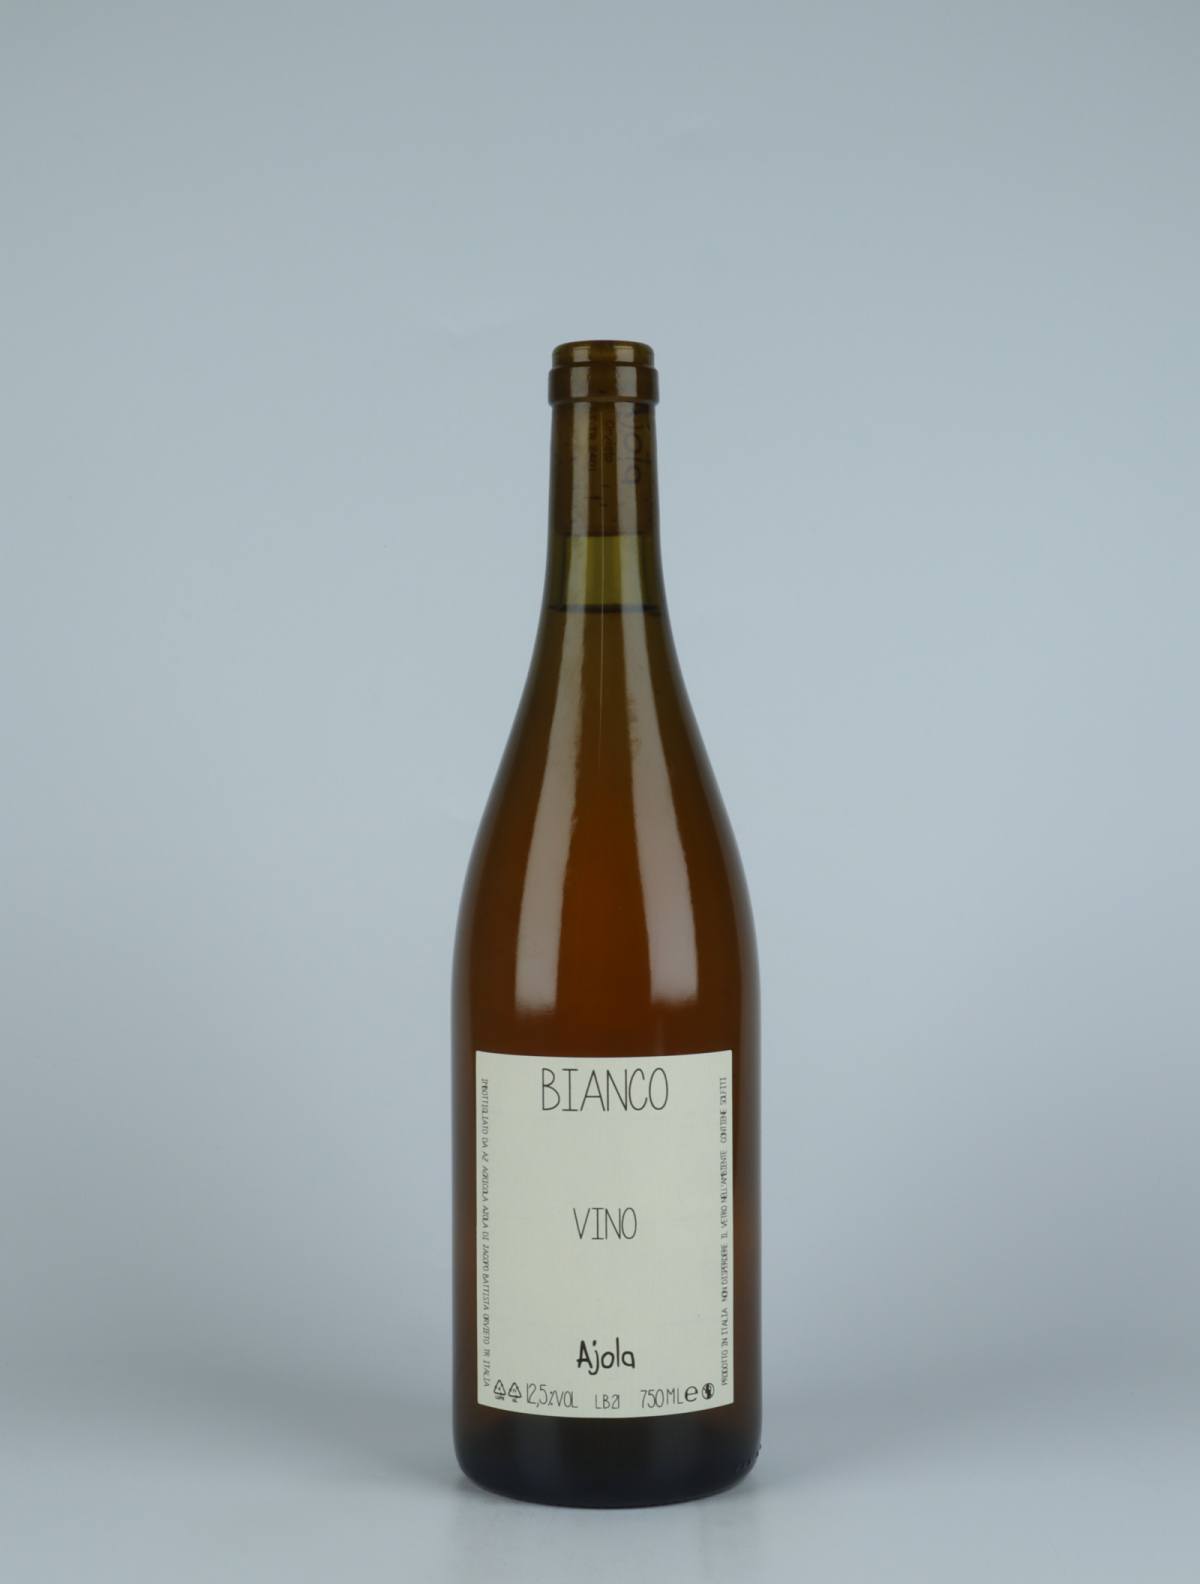 En flaske 2021 Vino Bianco Orange vin fra Ajola, Umbrien i Italien